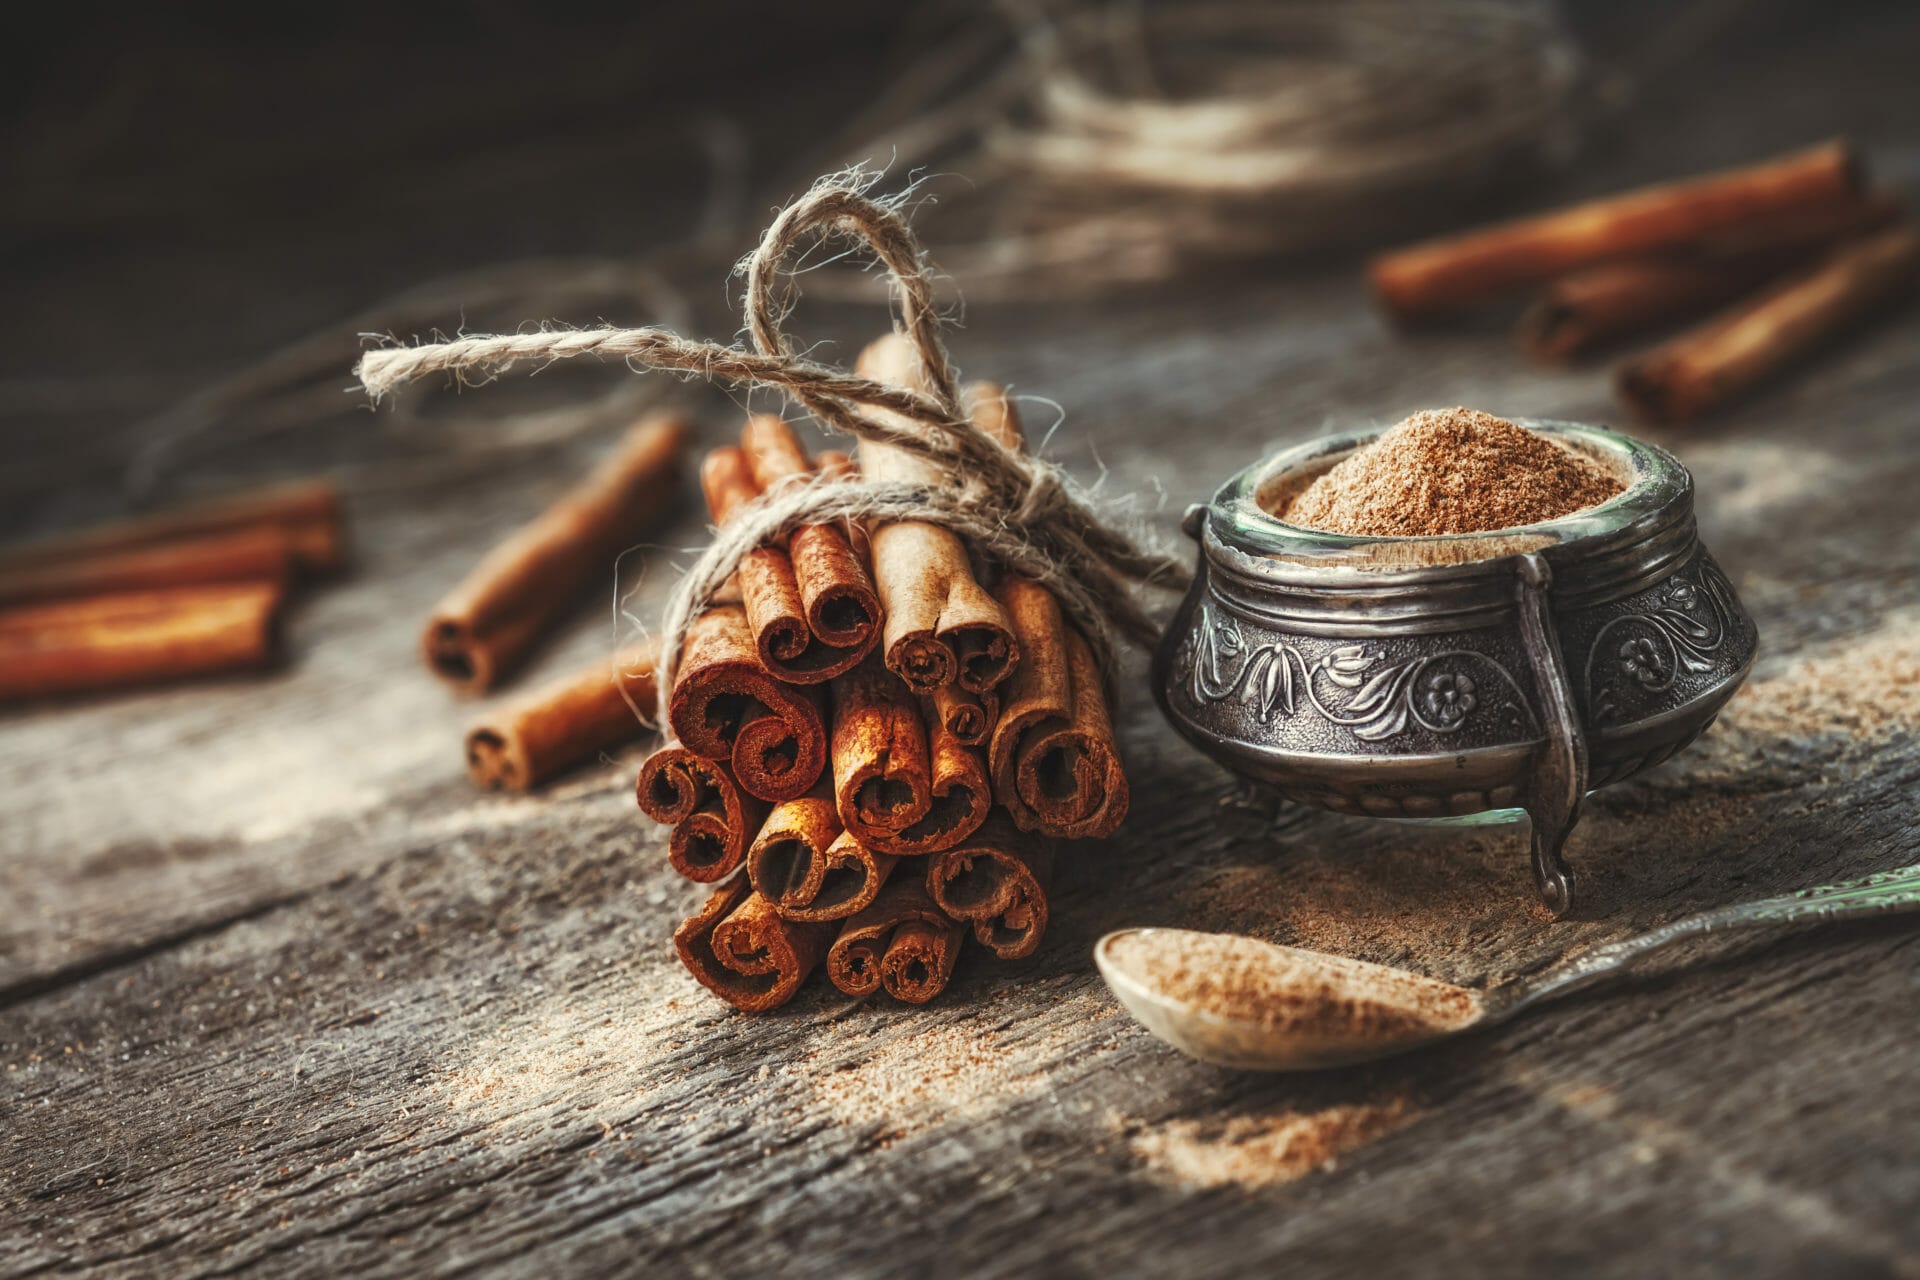 Cinnamon is a great source of antioxidants